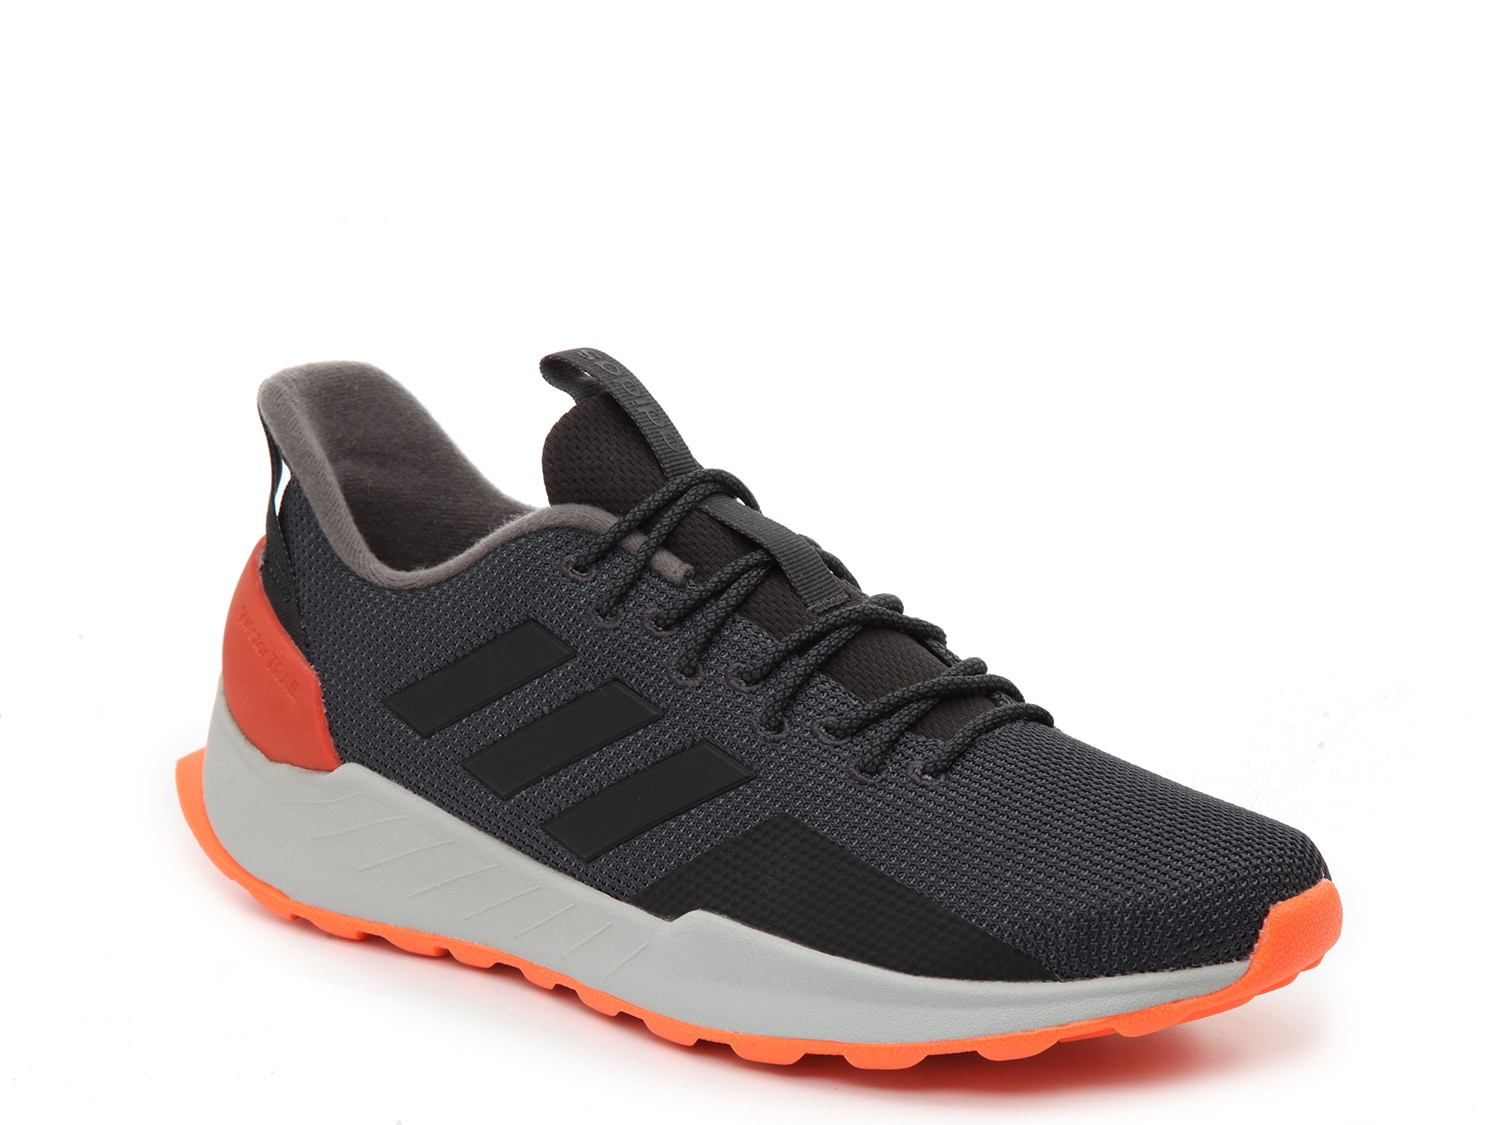 adidas men's questar trail running shoe